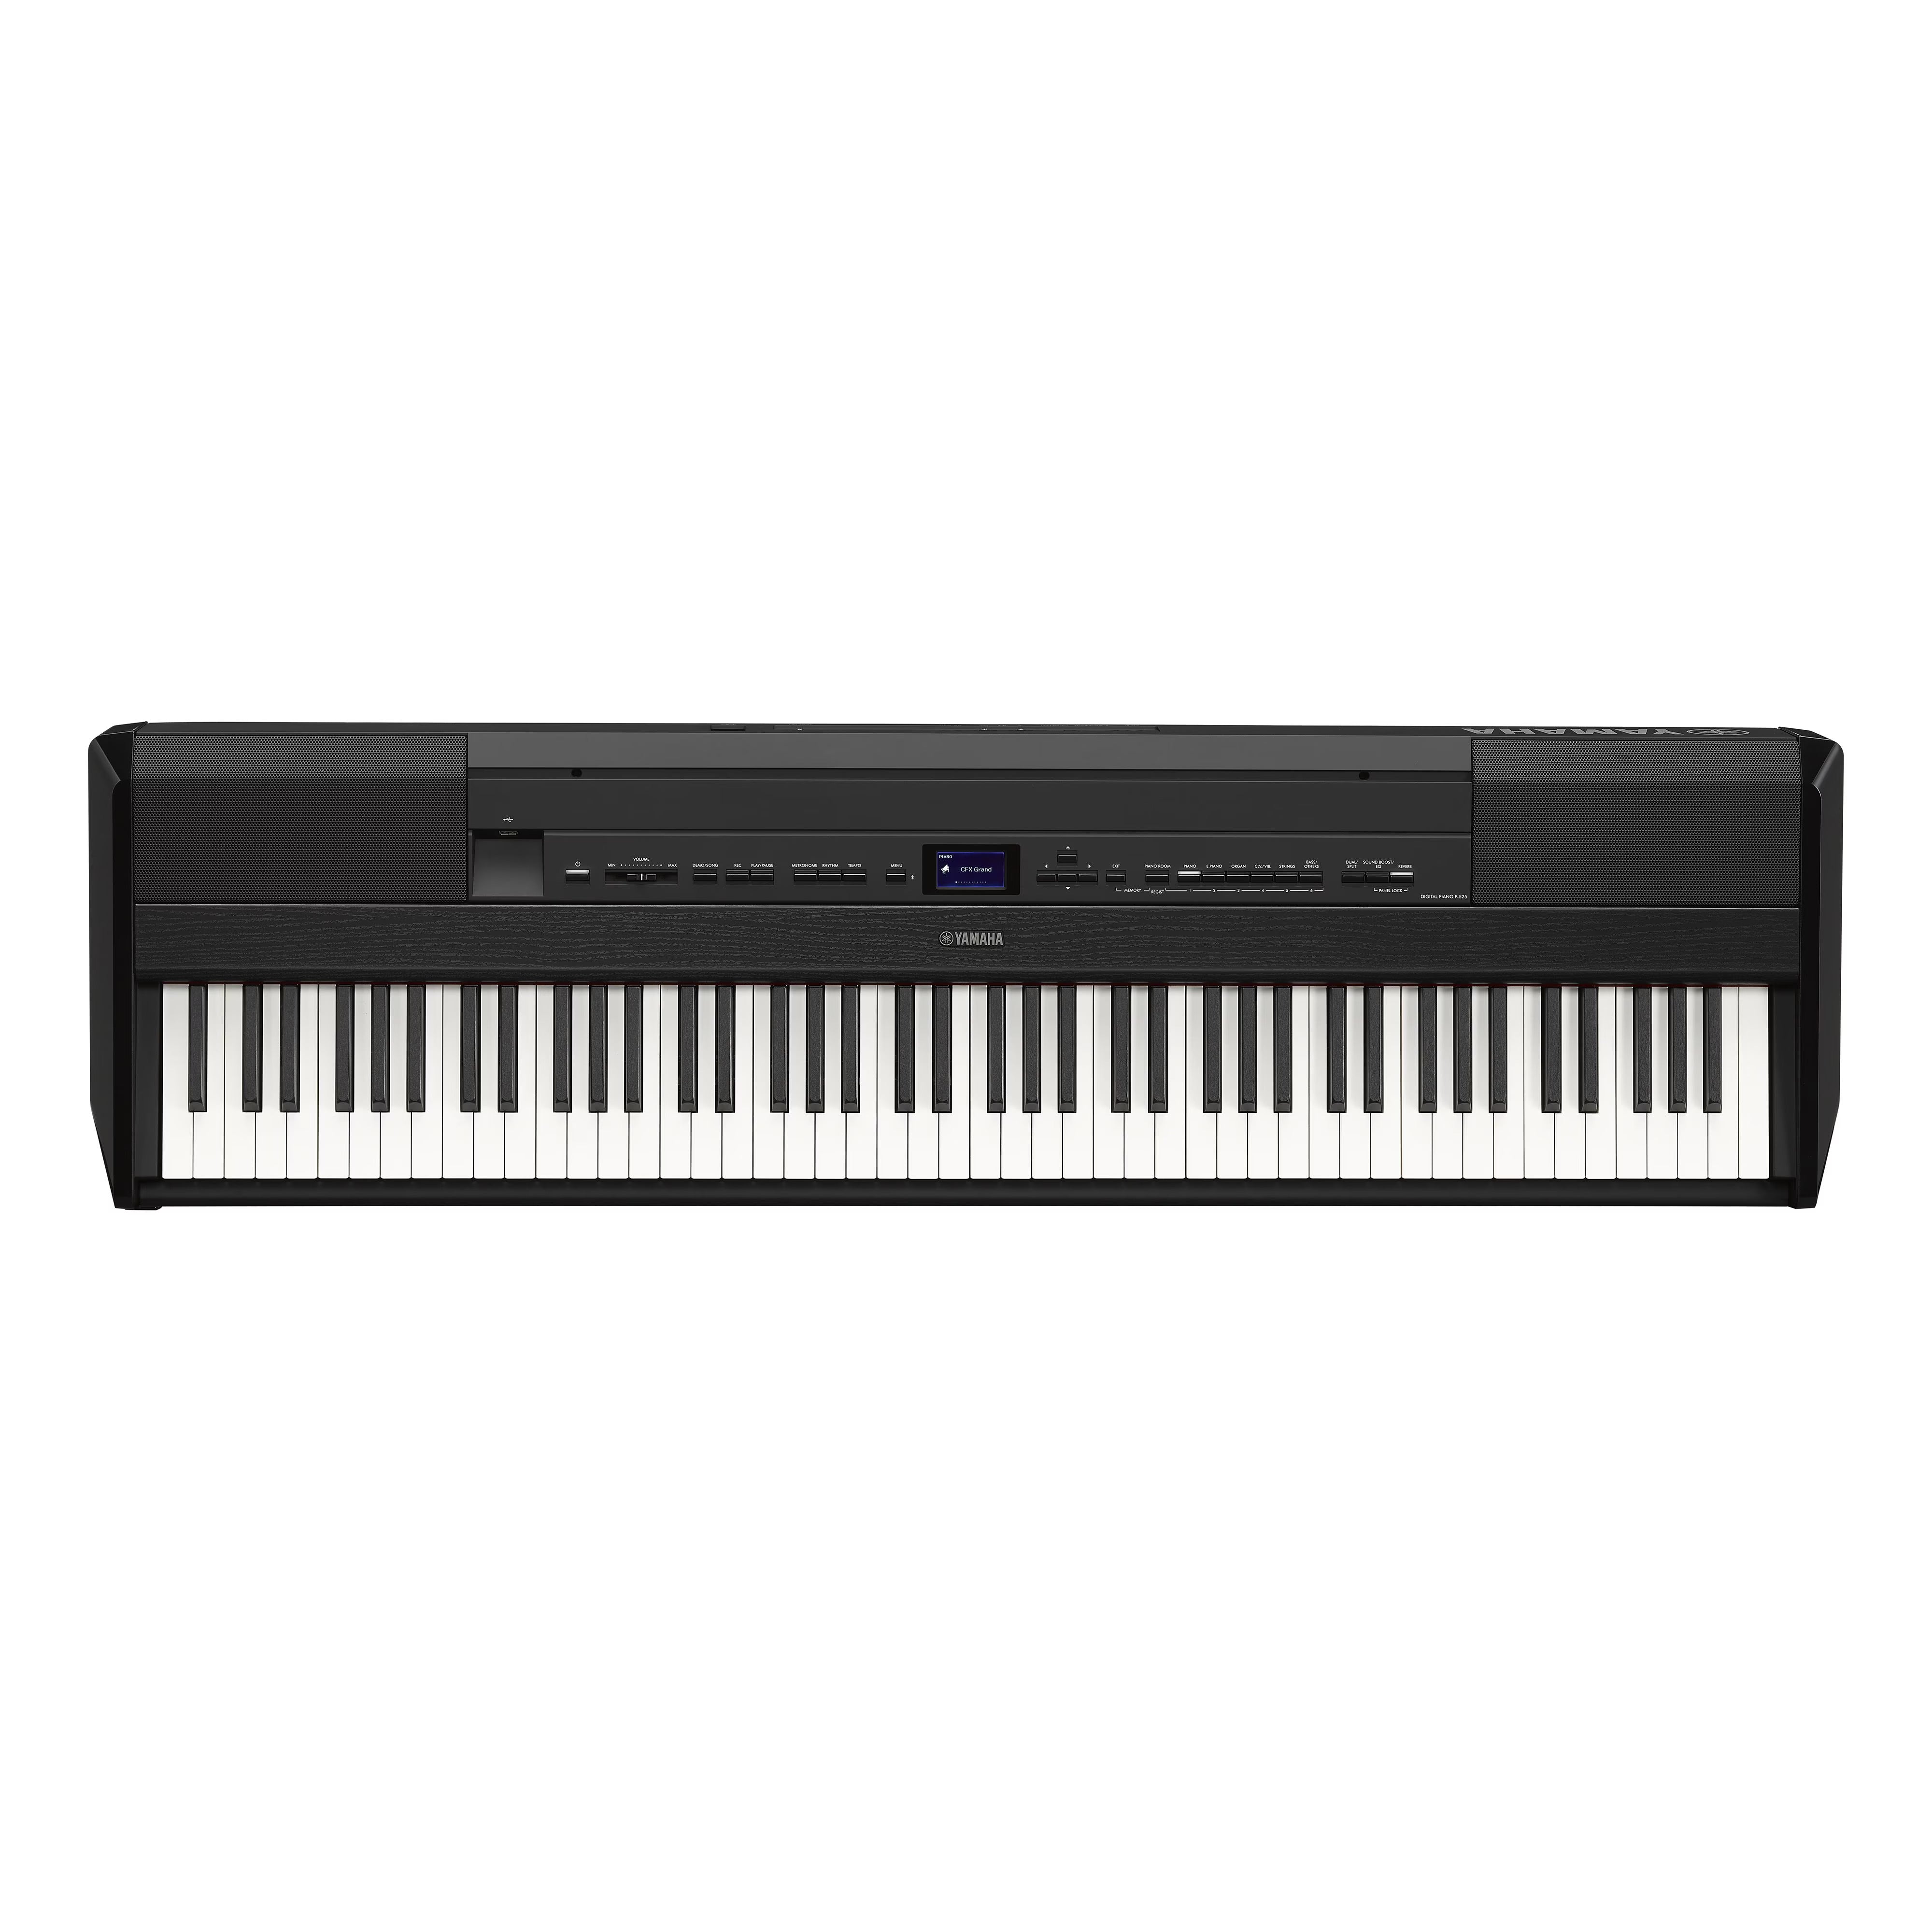 Yamaha P525 Portable Piano